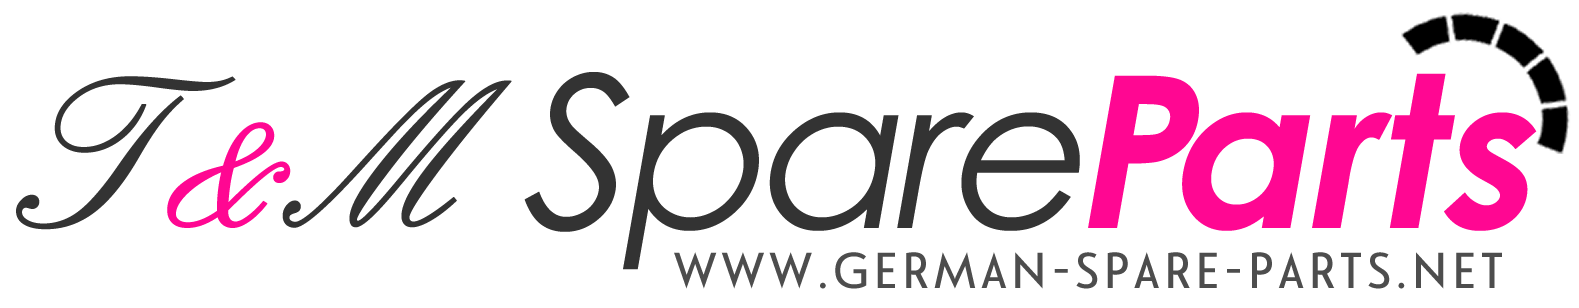 German Auto Parts Logo - Original German Carparts and Spare Parts BMW Mercedes Porsche VW Audi